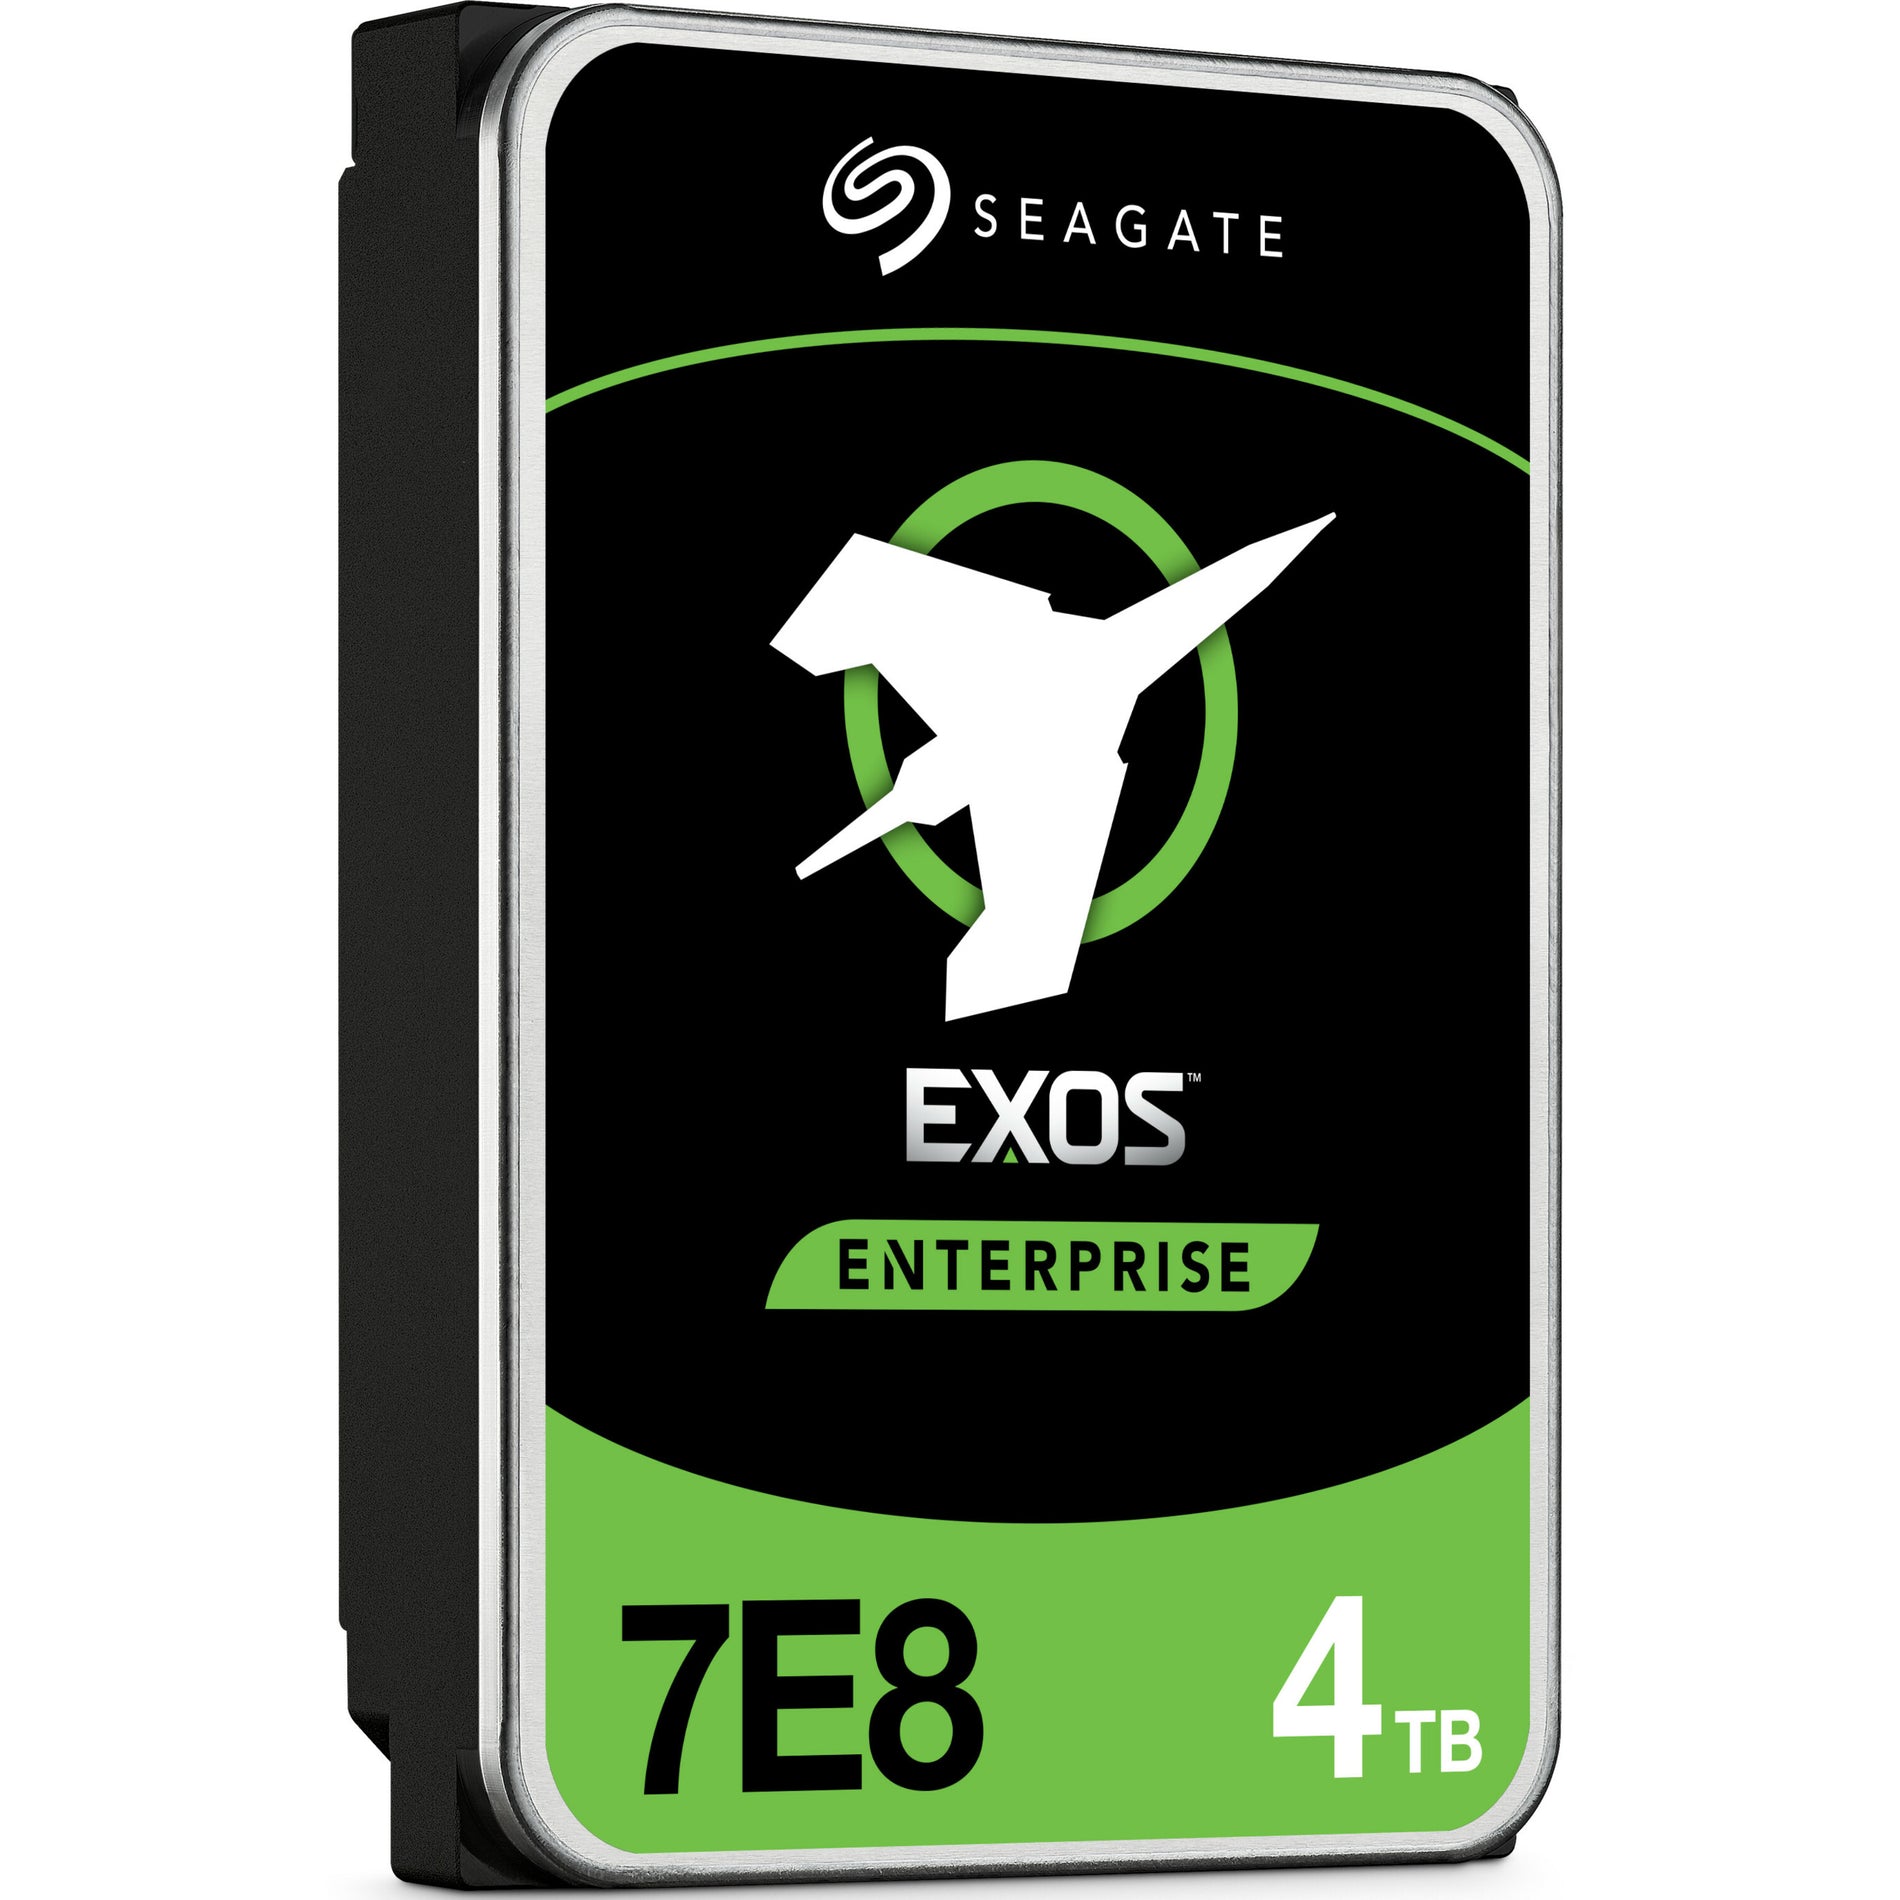 Seagate ST8000NM004A Exos 7E8 Hard Drive, 8TB Storage Capacity, 7200 RPM, 256MB Buffer